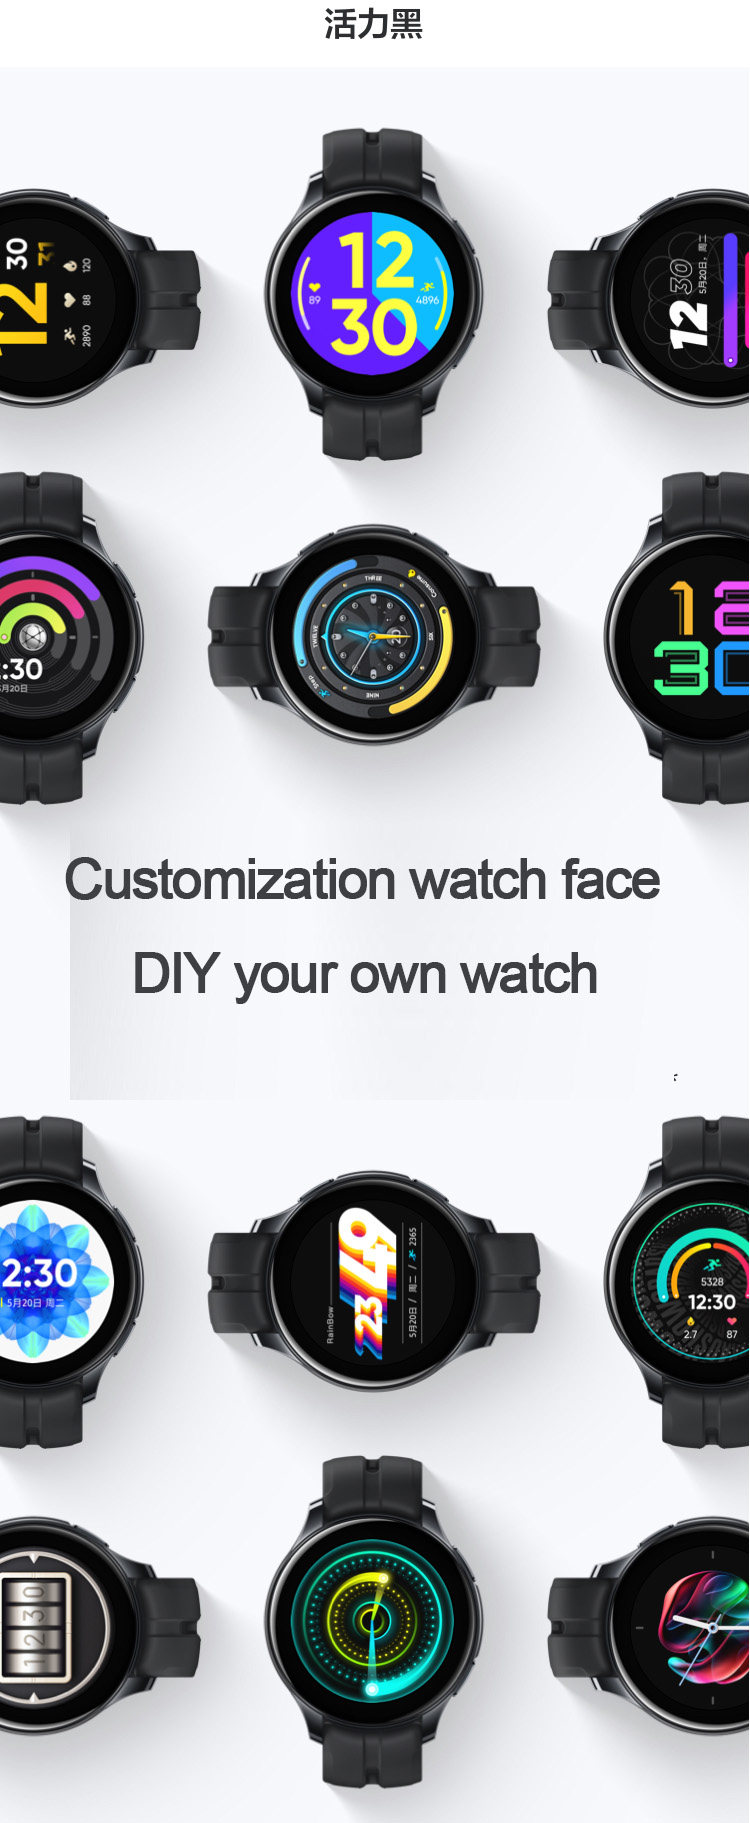 Realme Smartwatch T1